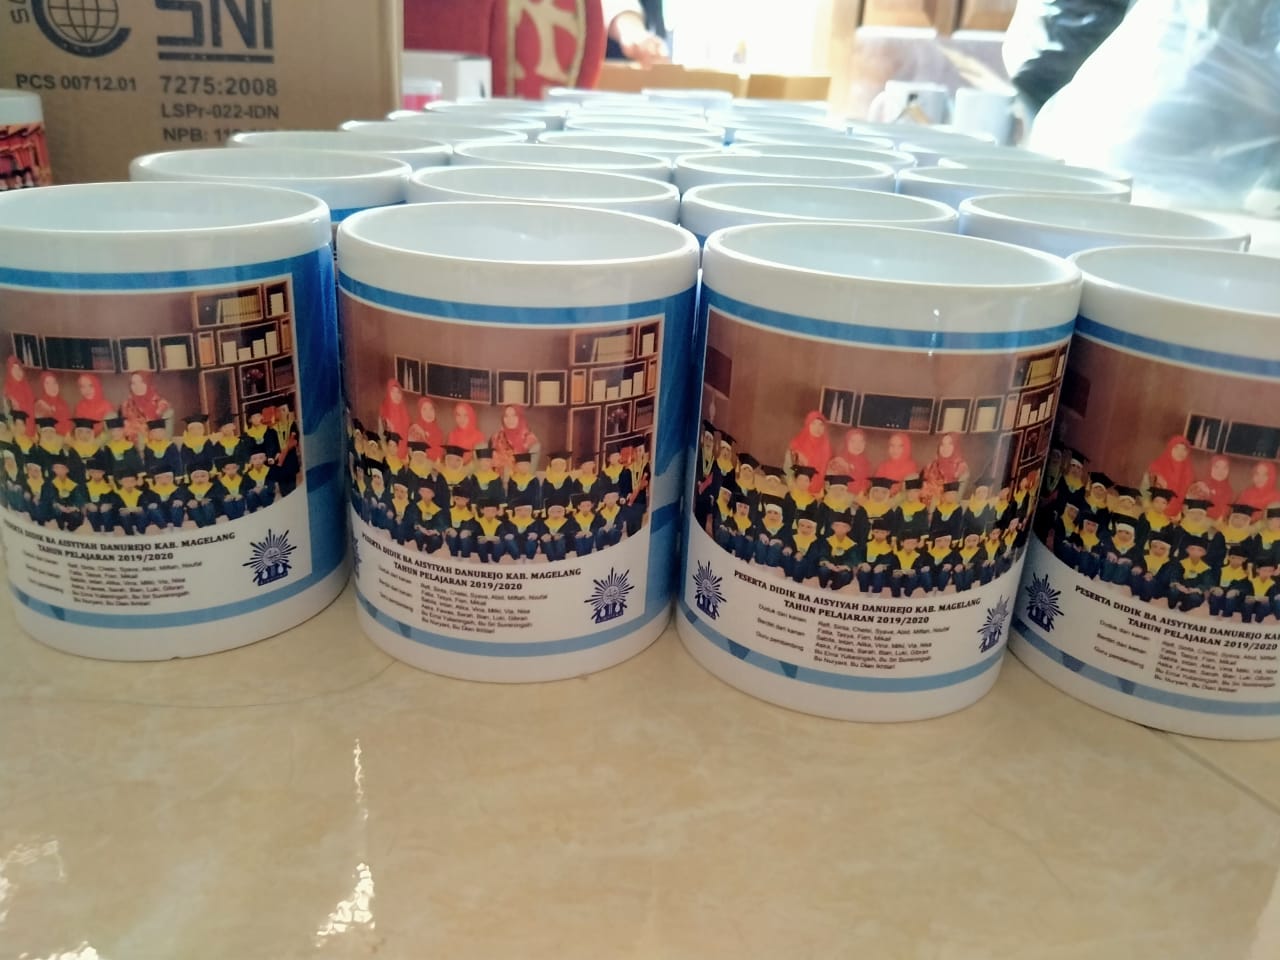 souvenir kado mug di Wulung Gunung Sawangan Magelang